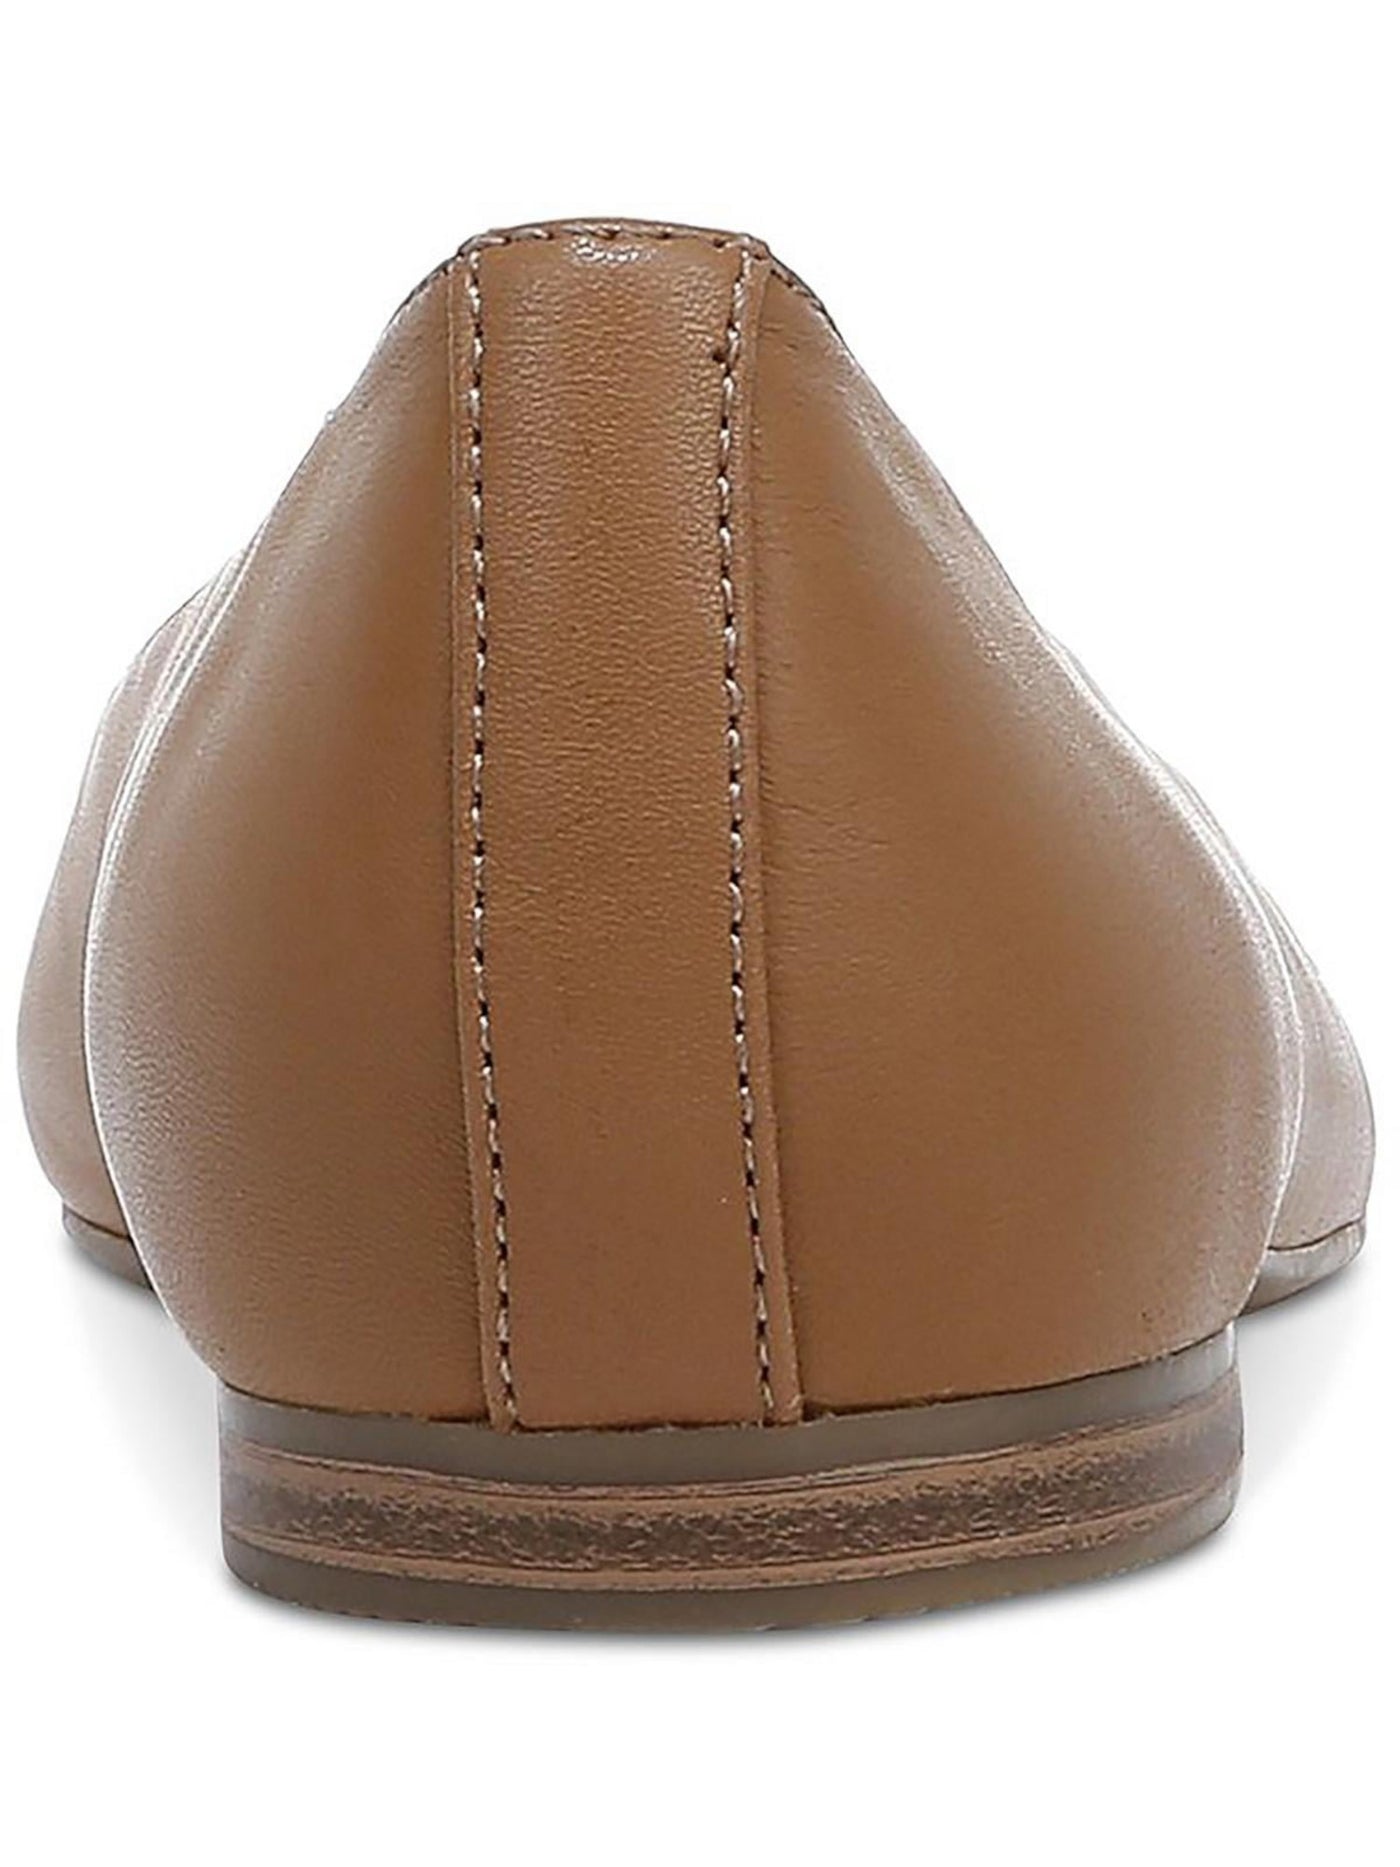 GIANI BERNINI Womens Beige Comfort Perforated Cushioned Aerinn Square Toe Slip On Leather Flats Shoes 5.5 M